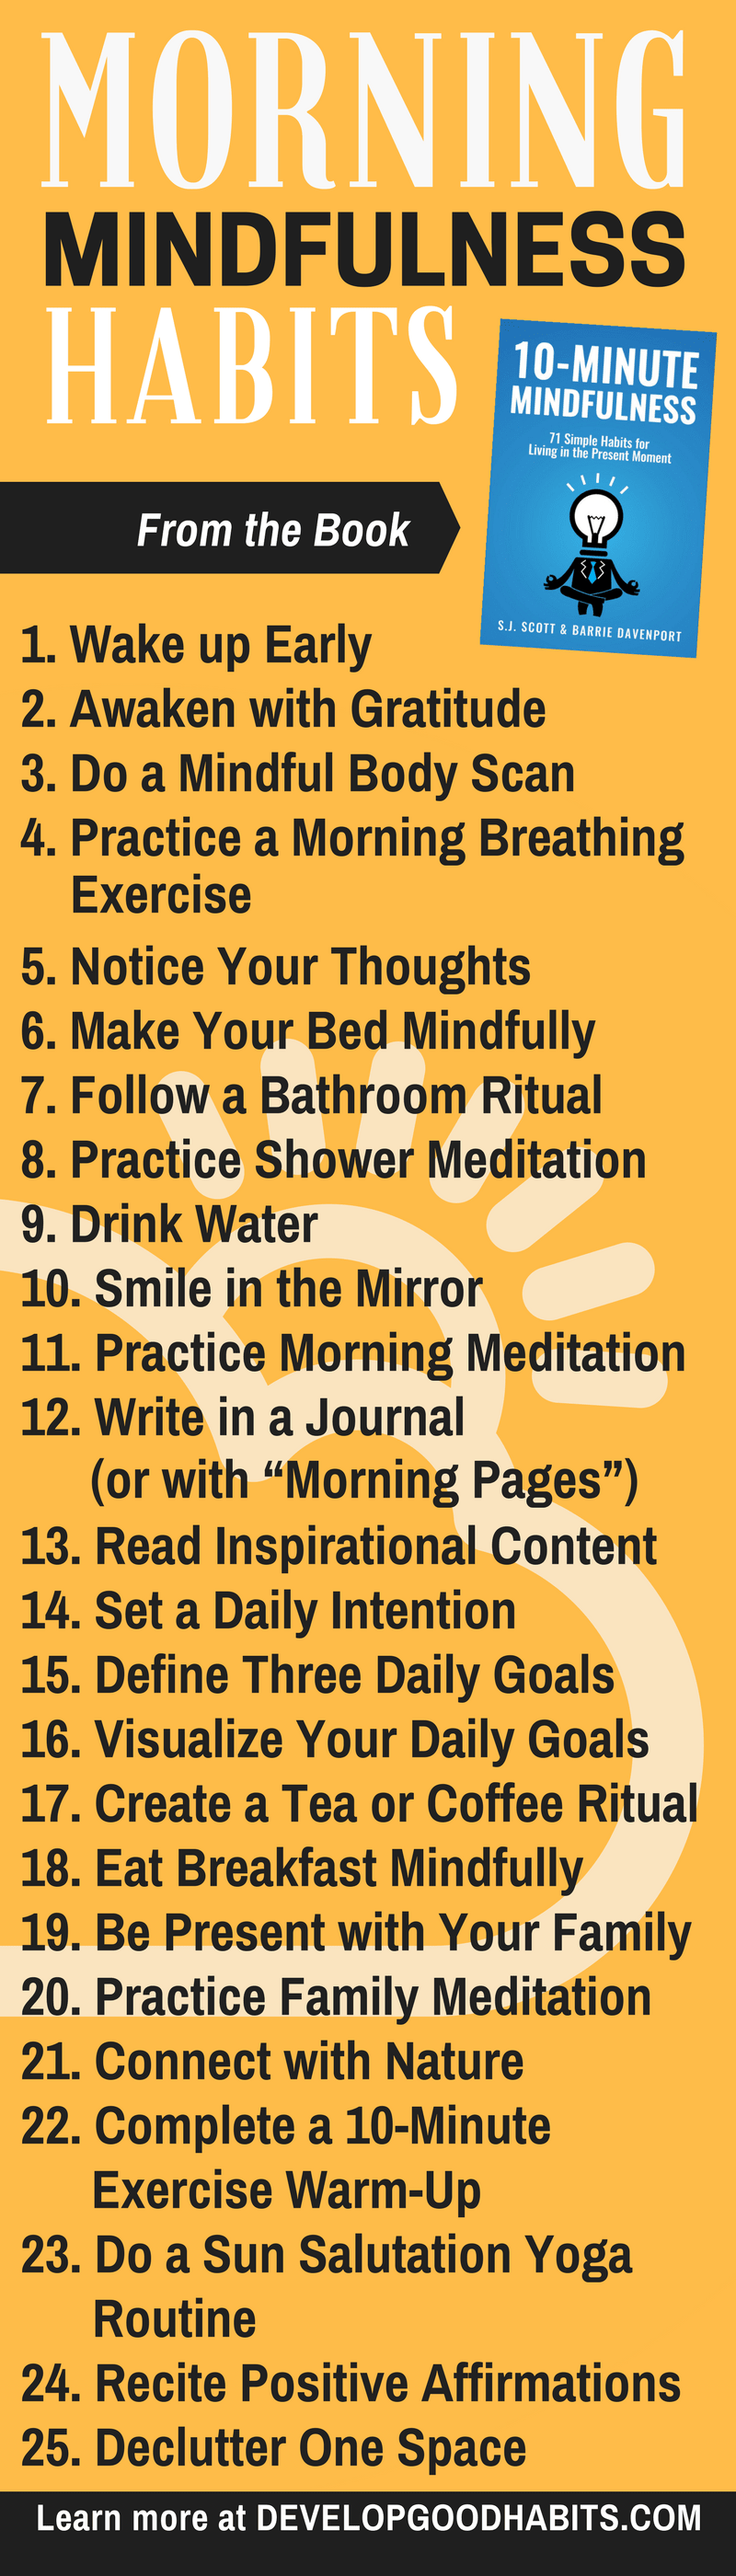 Morning Mindfulness excercises & habits